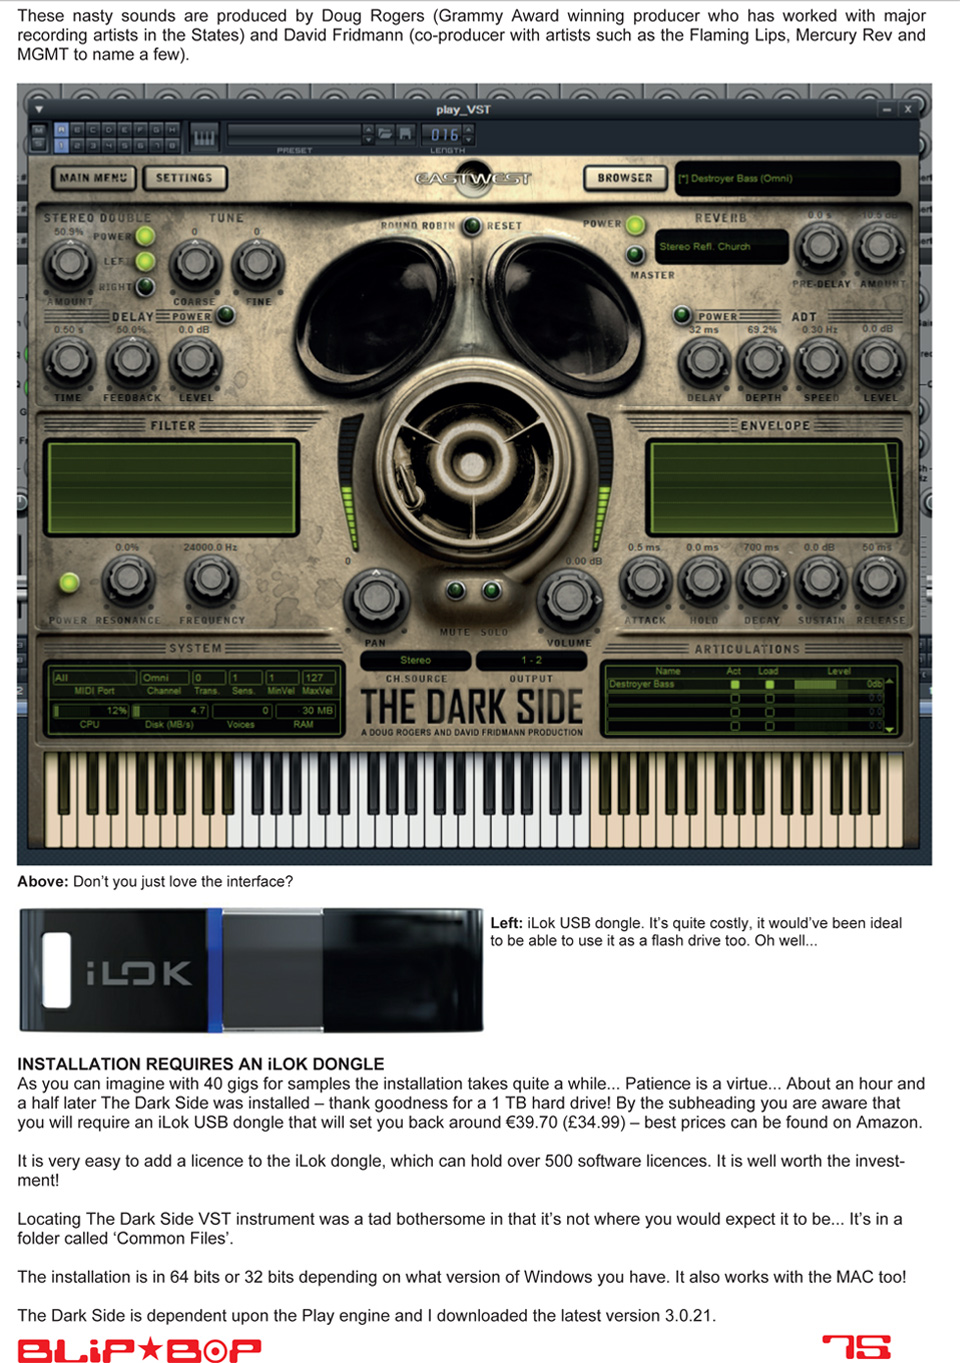 The Dark Side | Grunge VST Plugin| EastWest